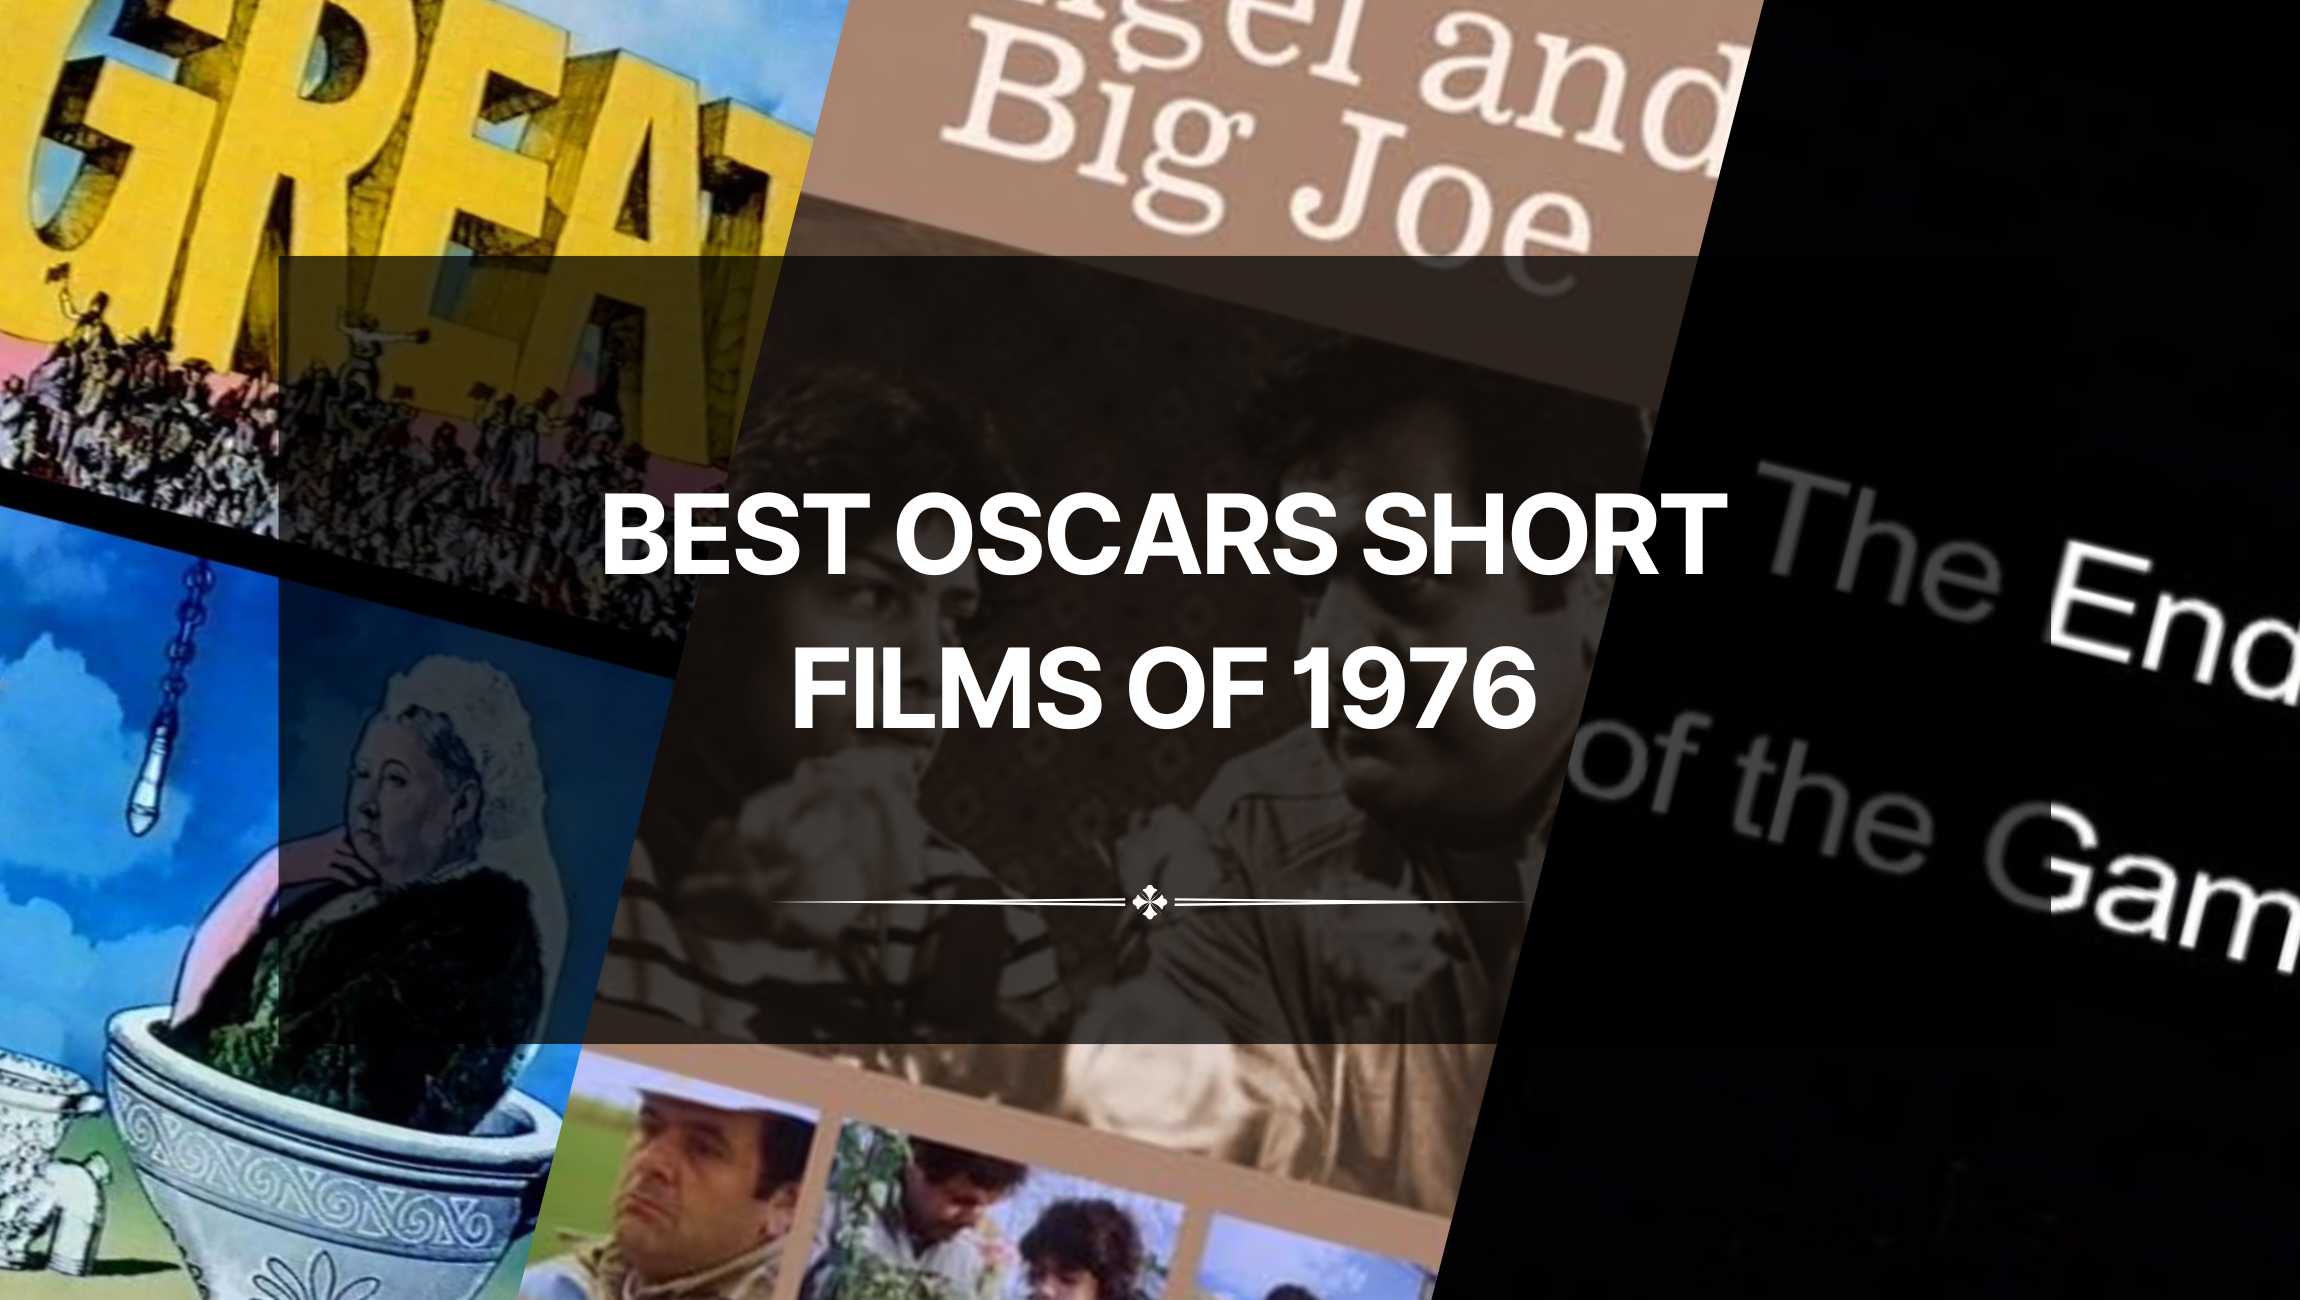 Best Oscars Short Films of 1976